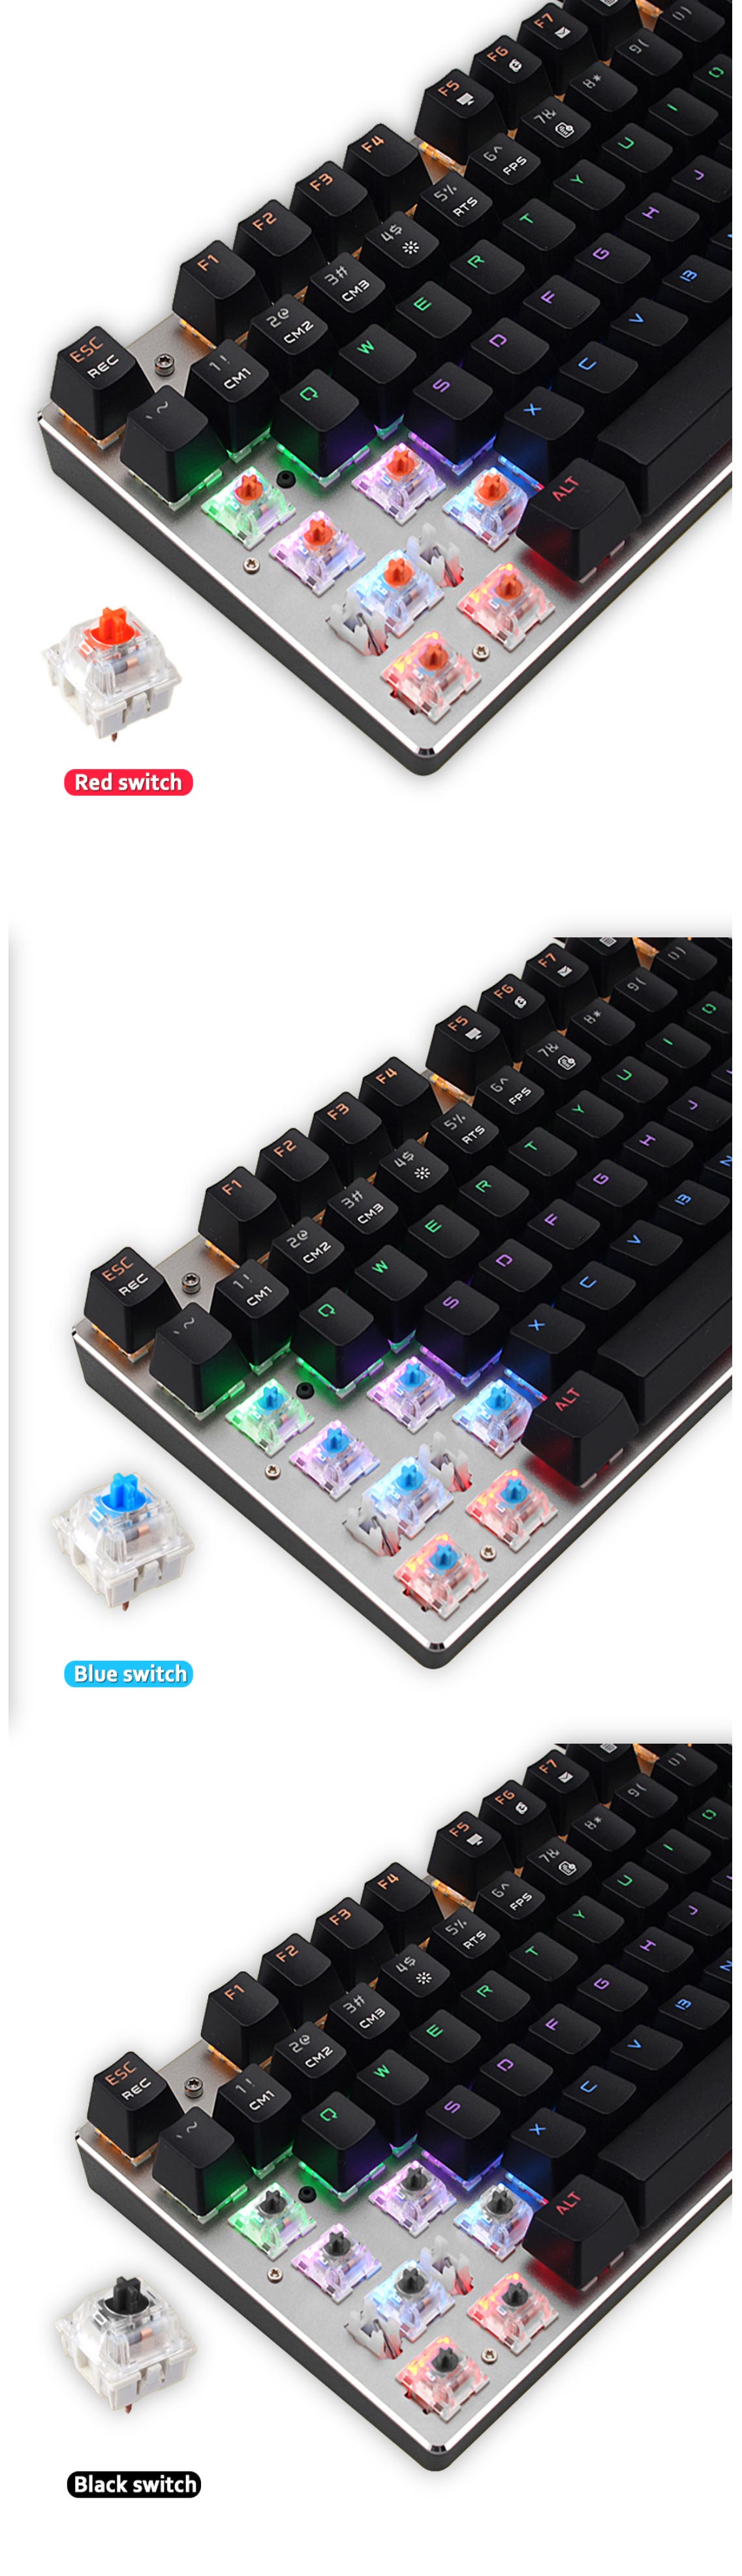 ZERO Mechanical Gaming Keyboard, 104 Keys Black Switch USB Wired Gaming  Keyboard with LED Mix-light Anti-ghosting Blacklit for Gamer Tablet Desktop  